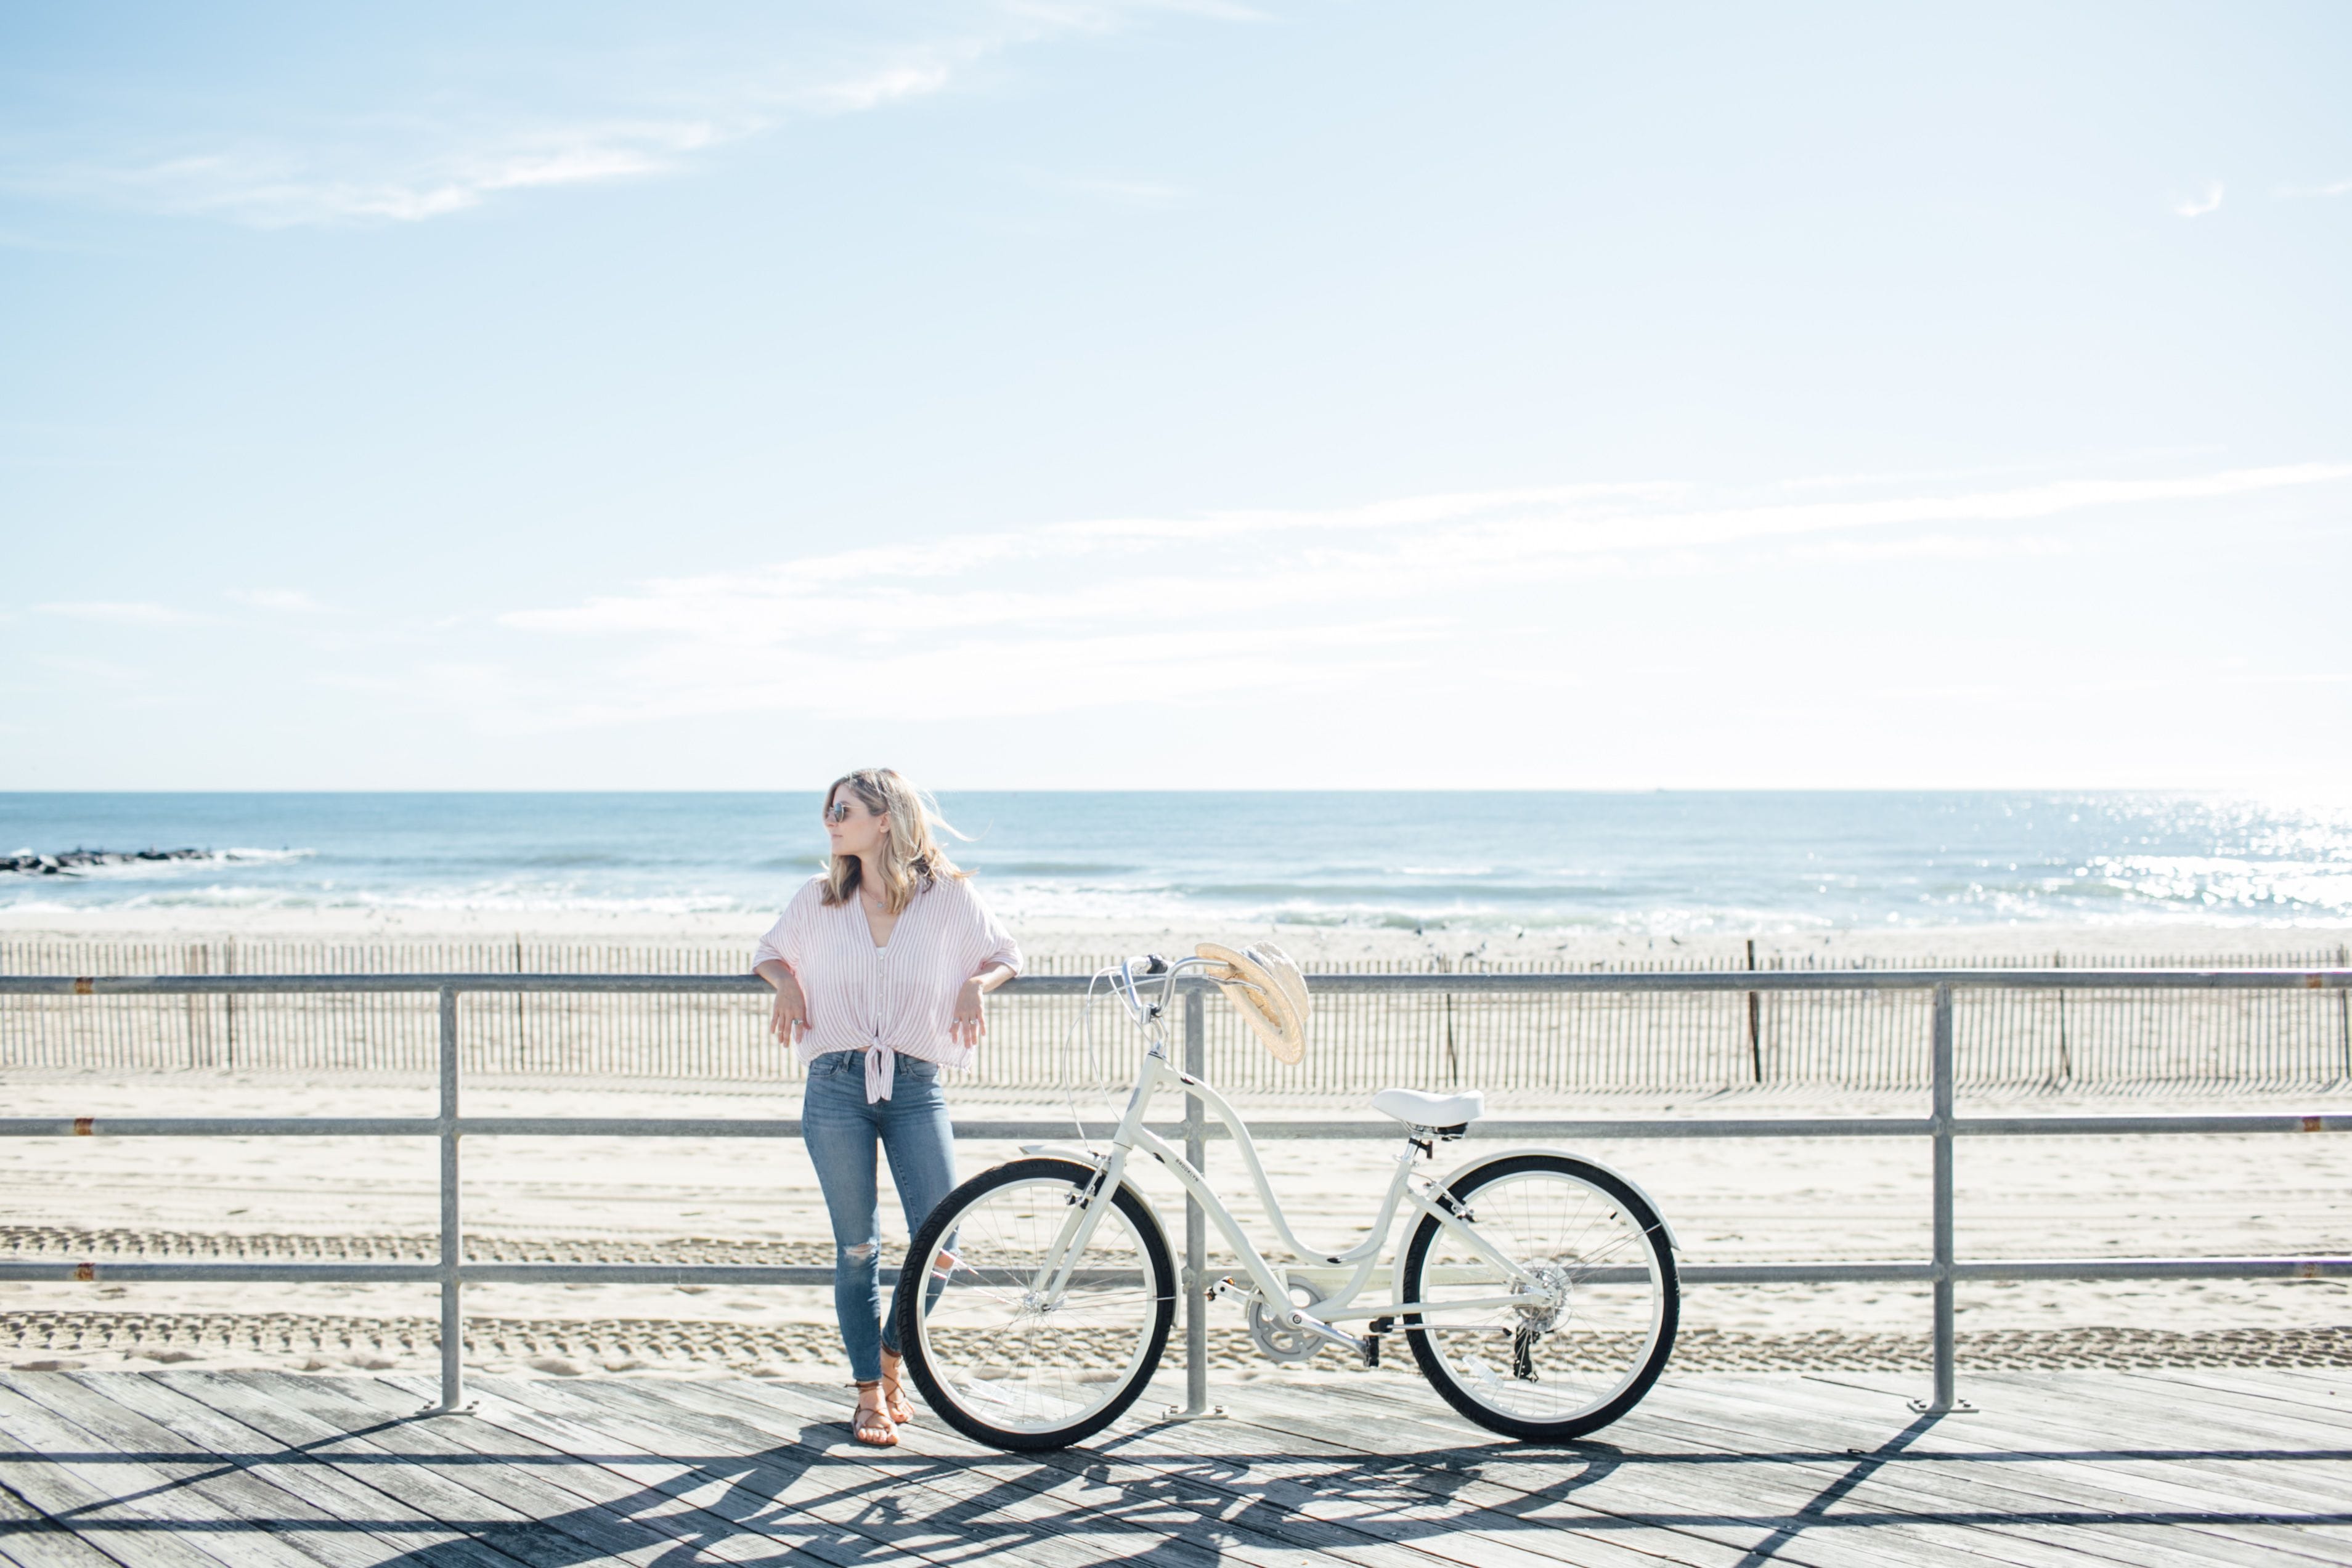 bike riding on the beach